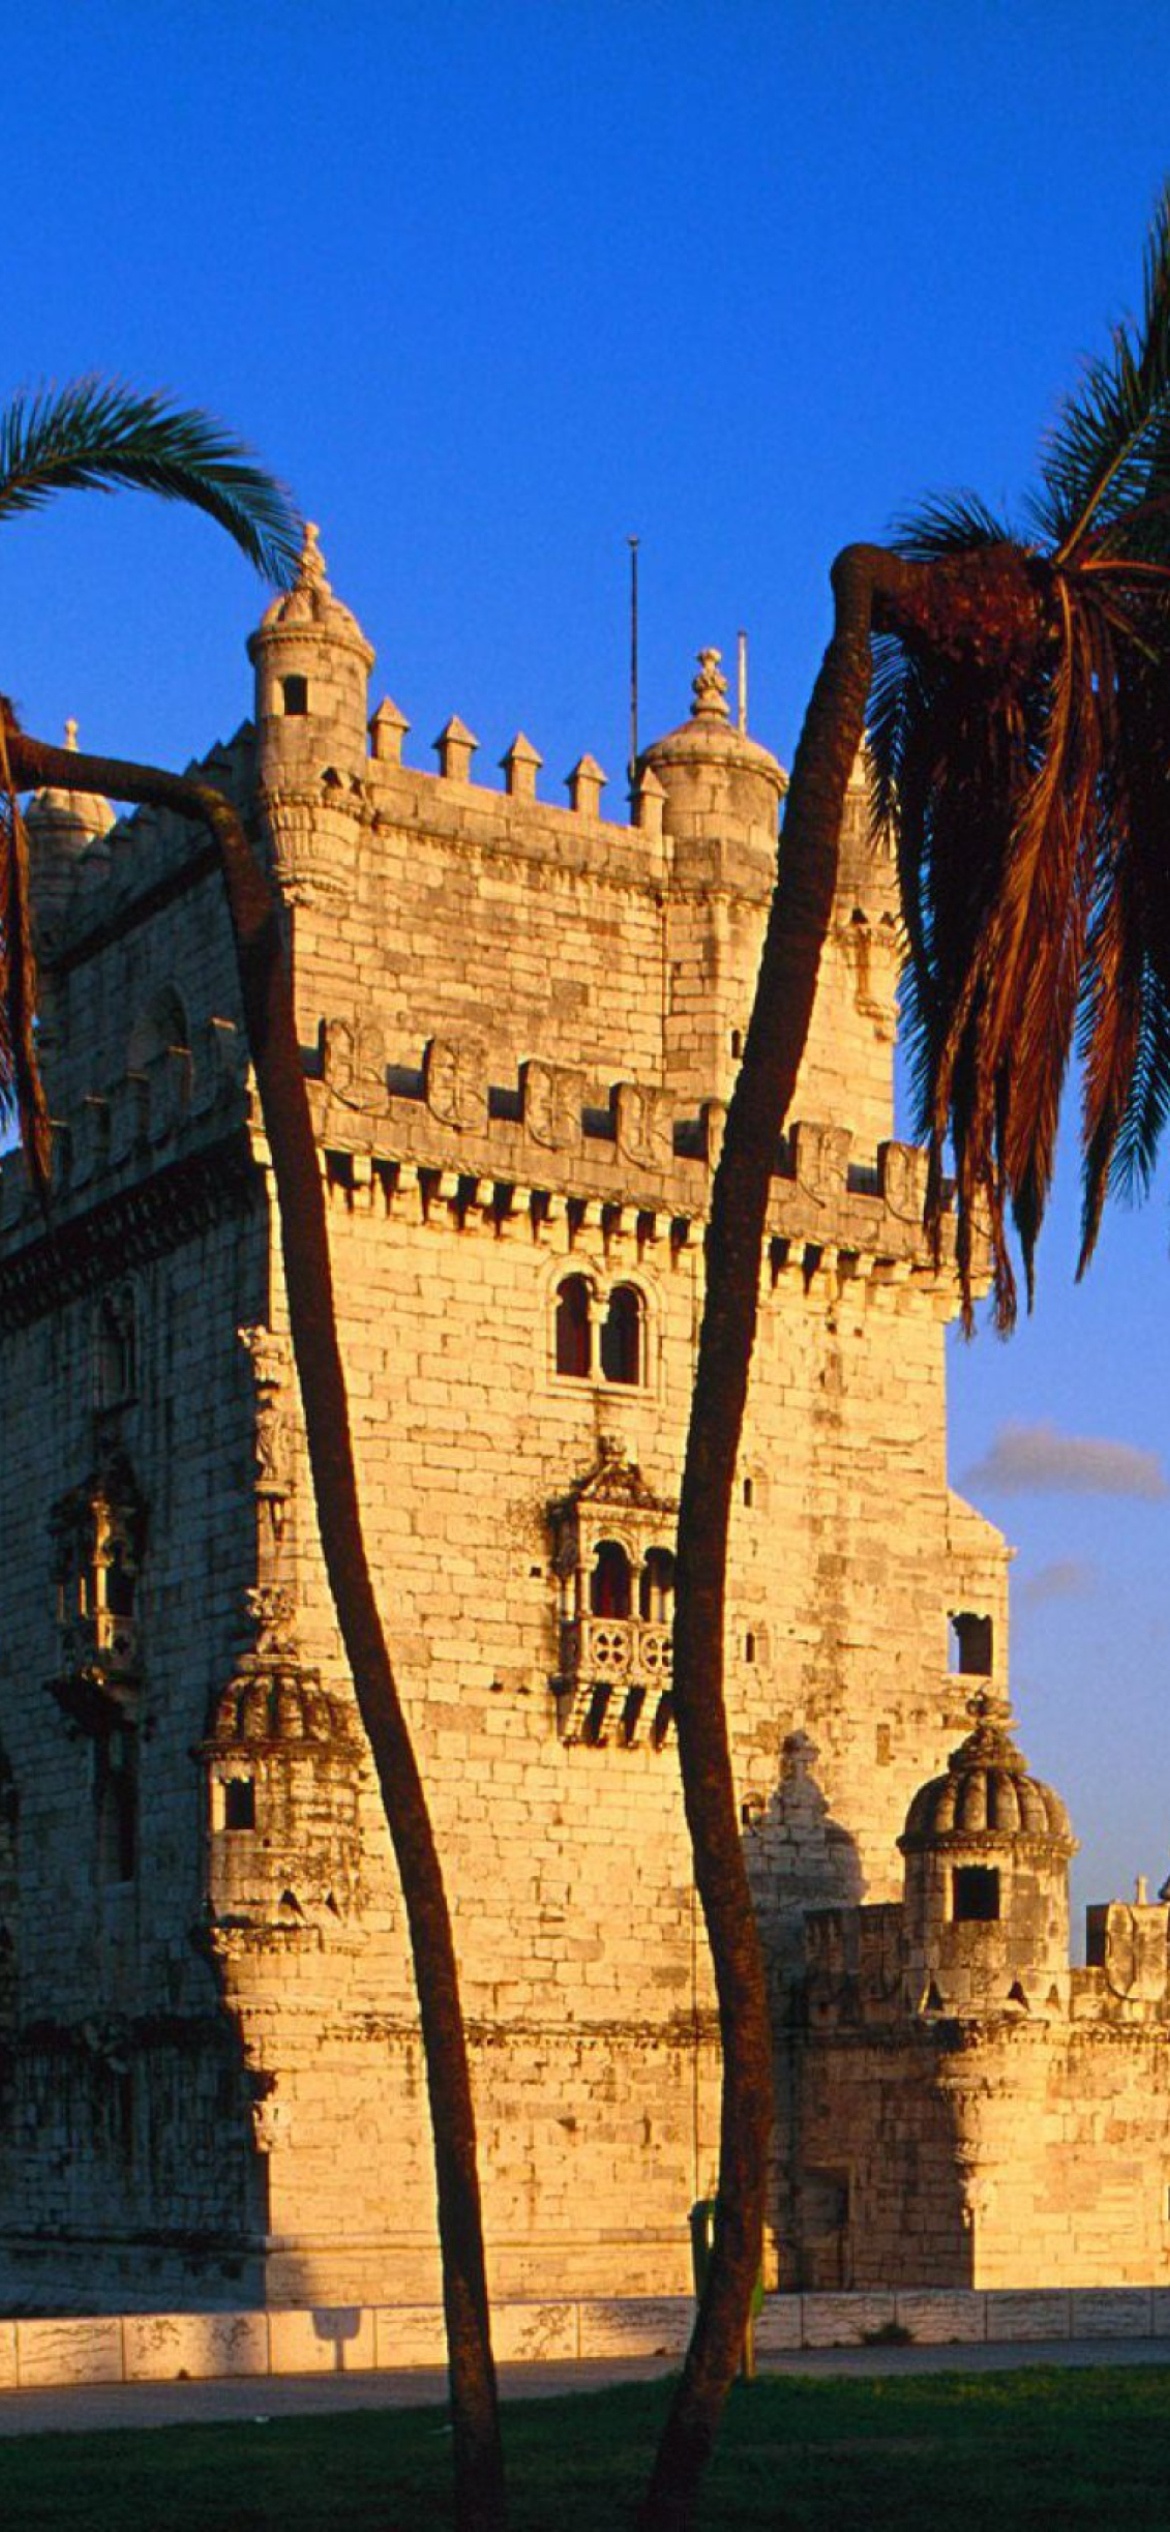 Belem Tower, Portugal wallpaper, iPhone wallpaper, Free download, 1170x2540 HD Phone